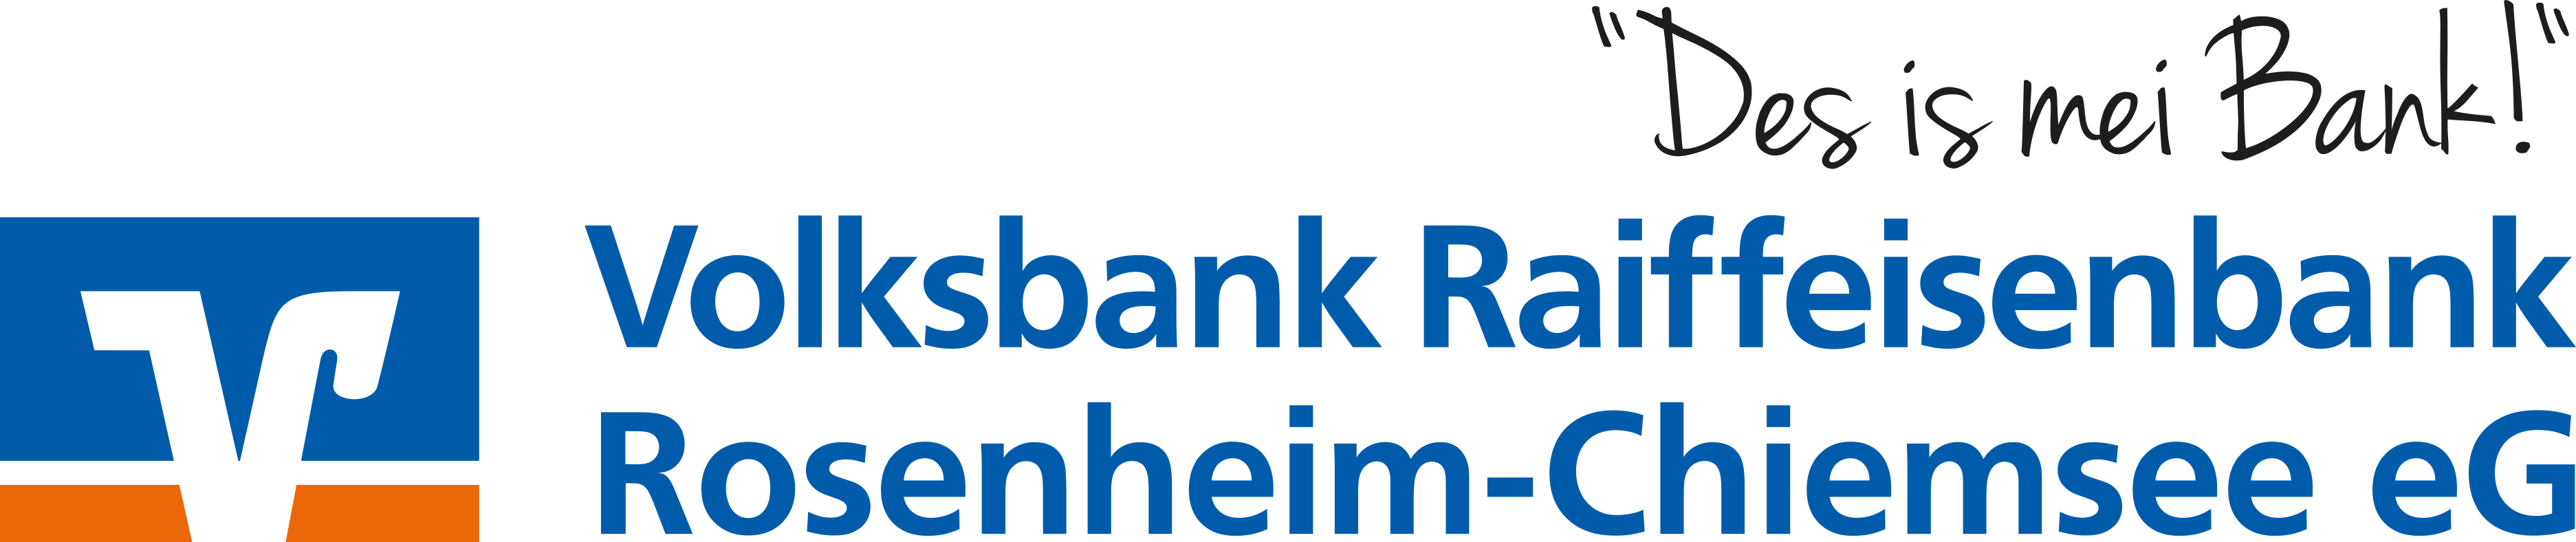 Volksbank Raiffeisenbank Rosenheim-Chiemsee eG